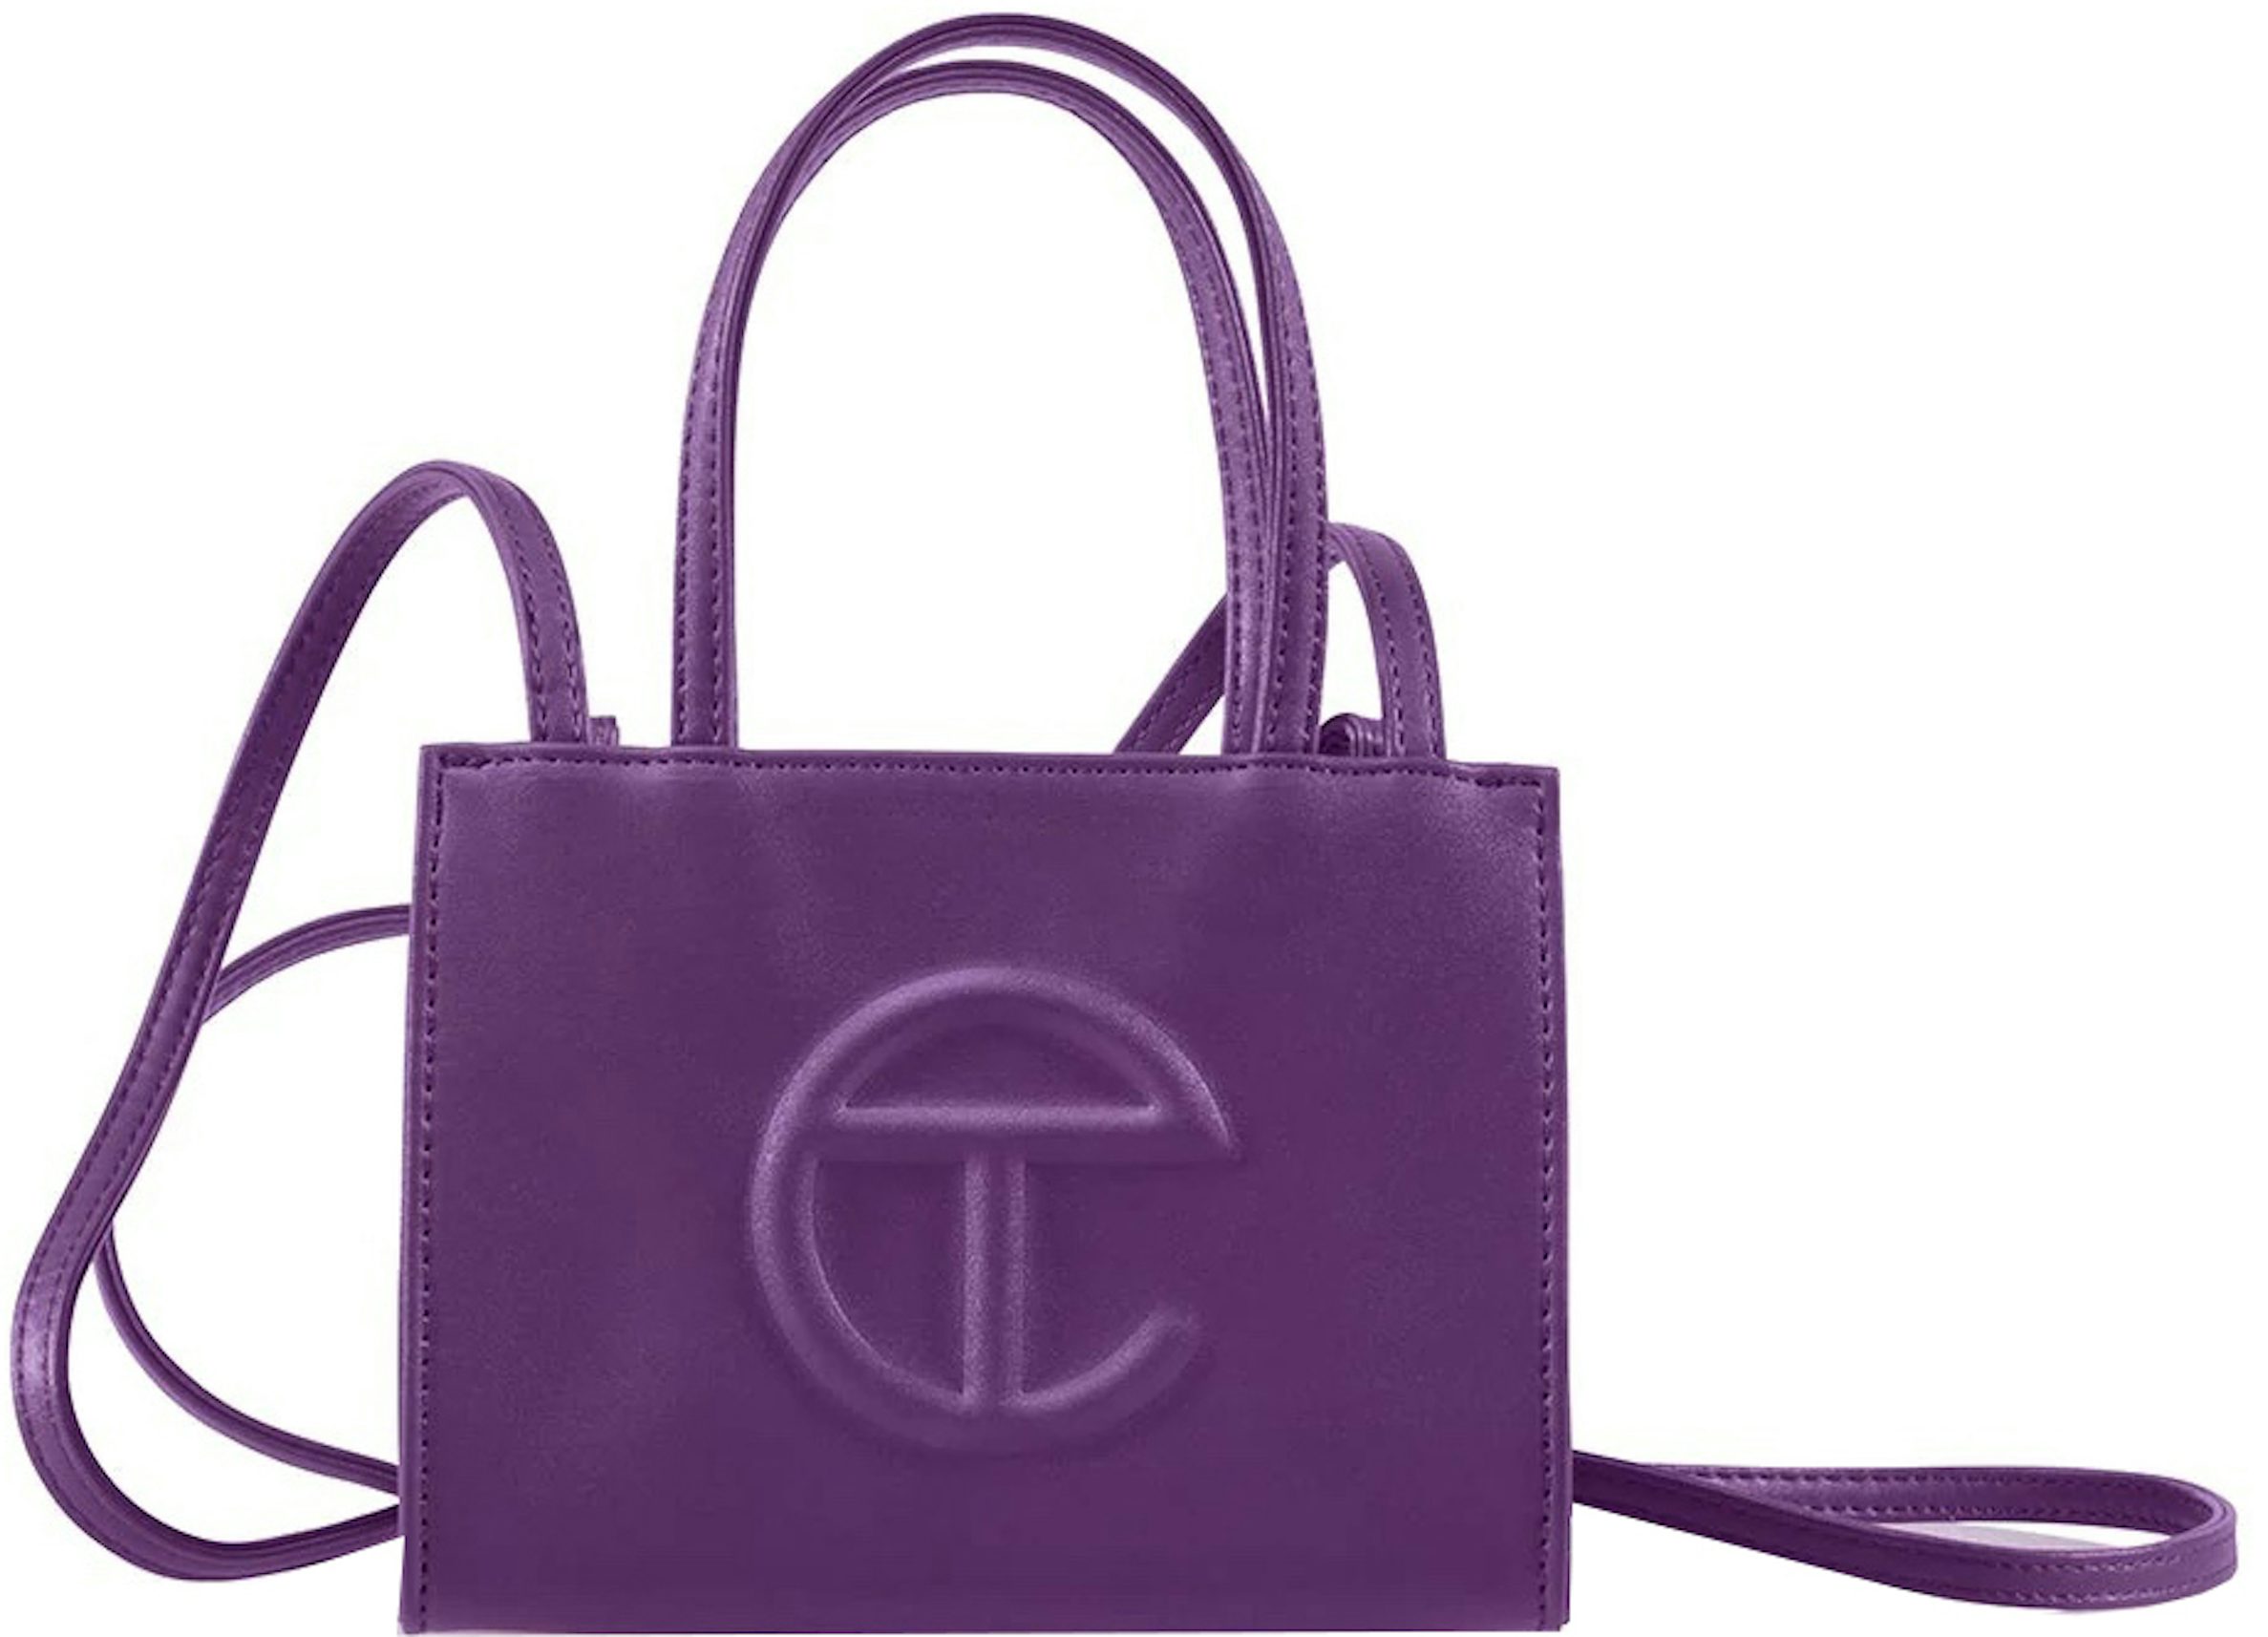 Telfar Shopping Bag Small Grape in Vegan Leather - US